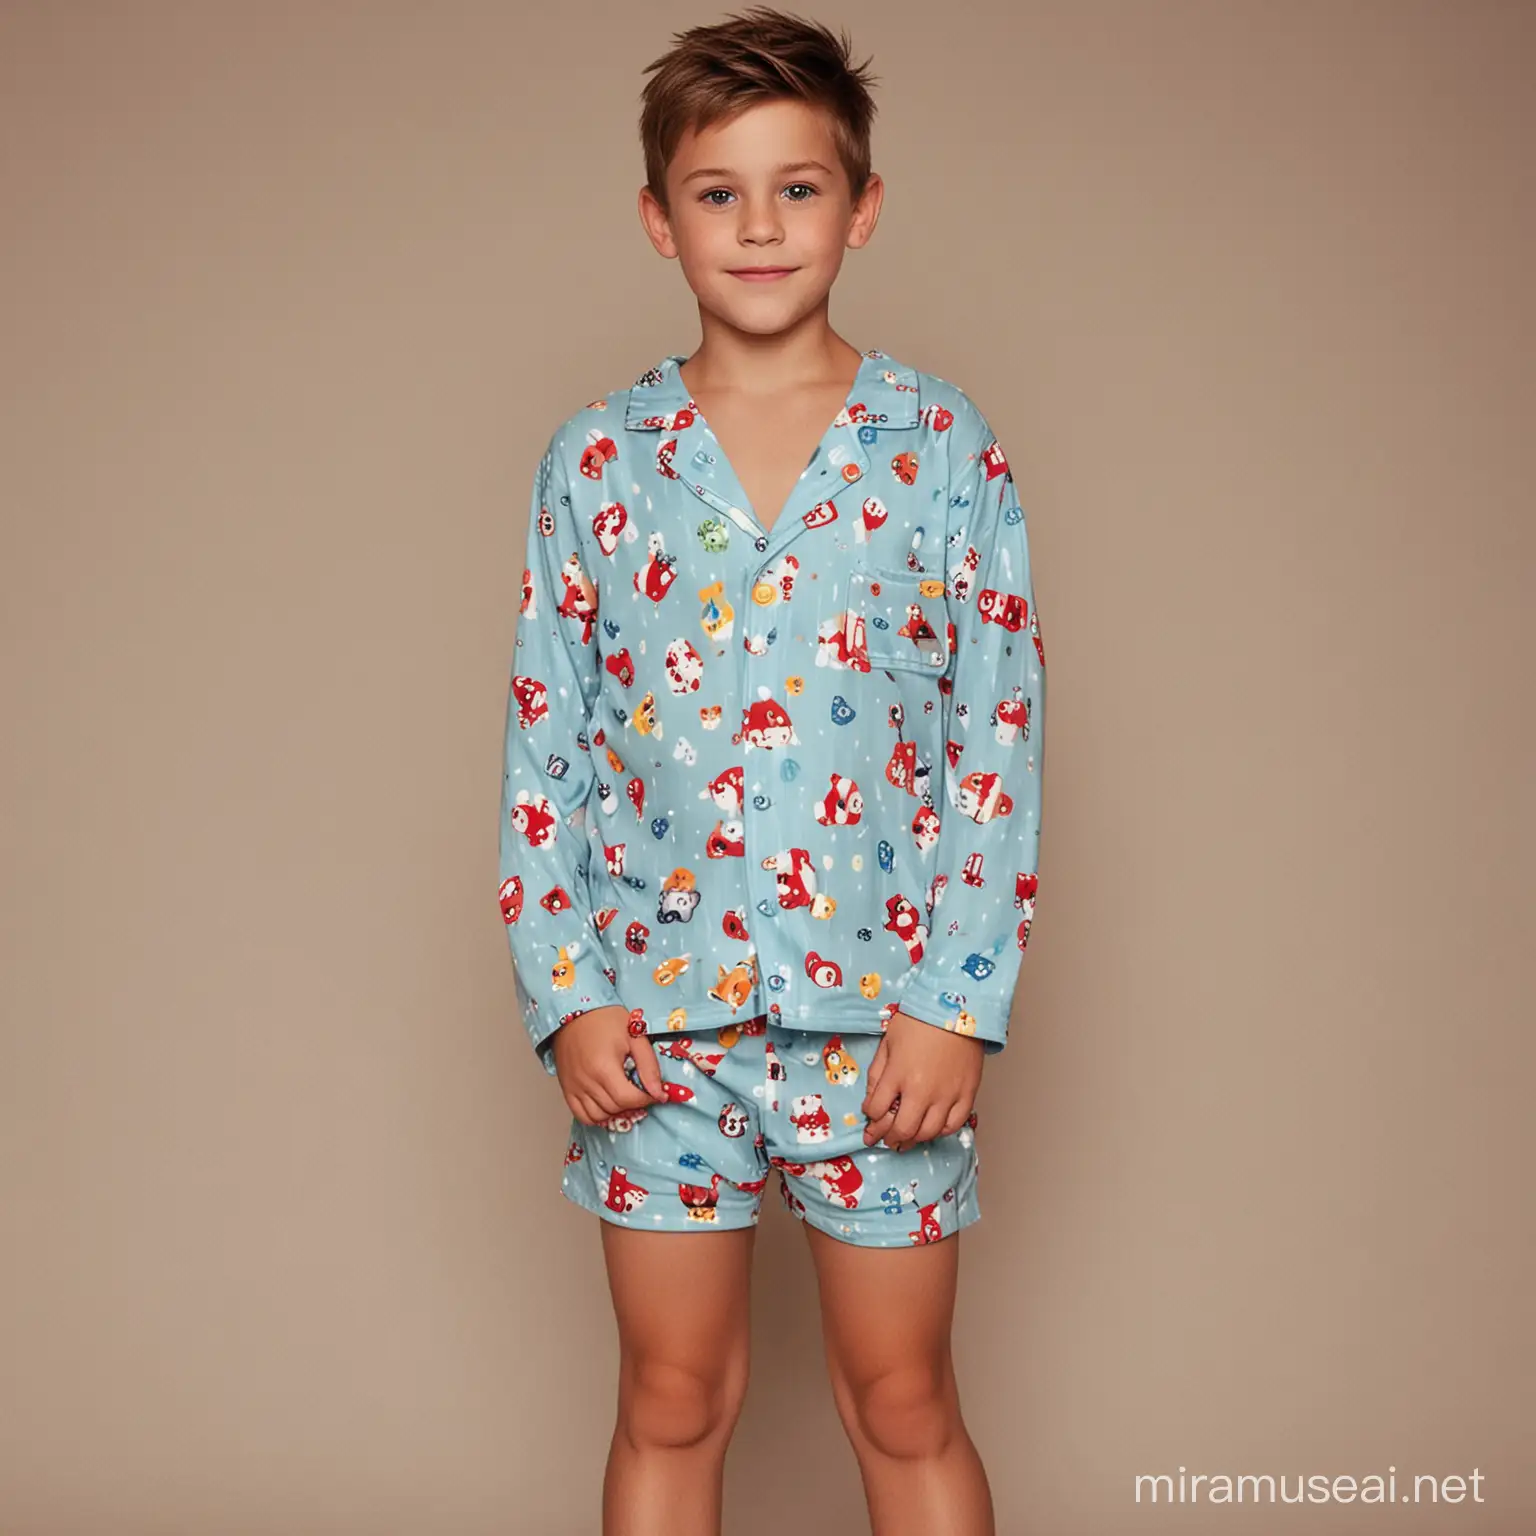 Adorable PajamasClad Boy Without Pants